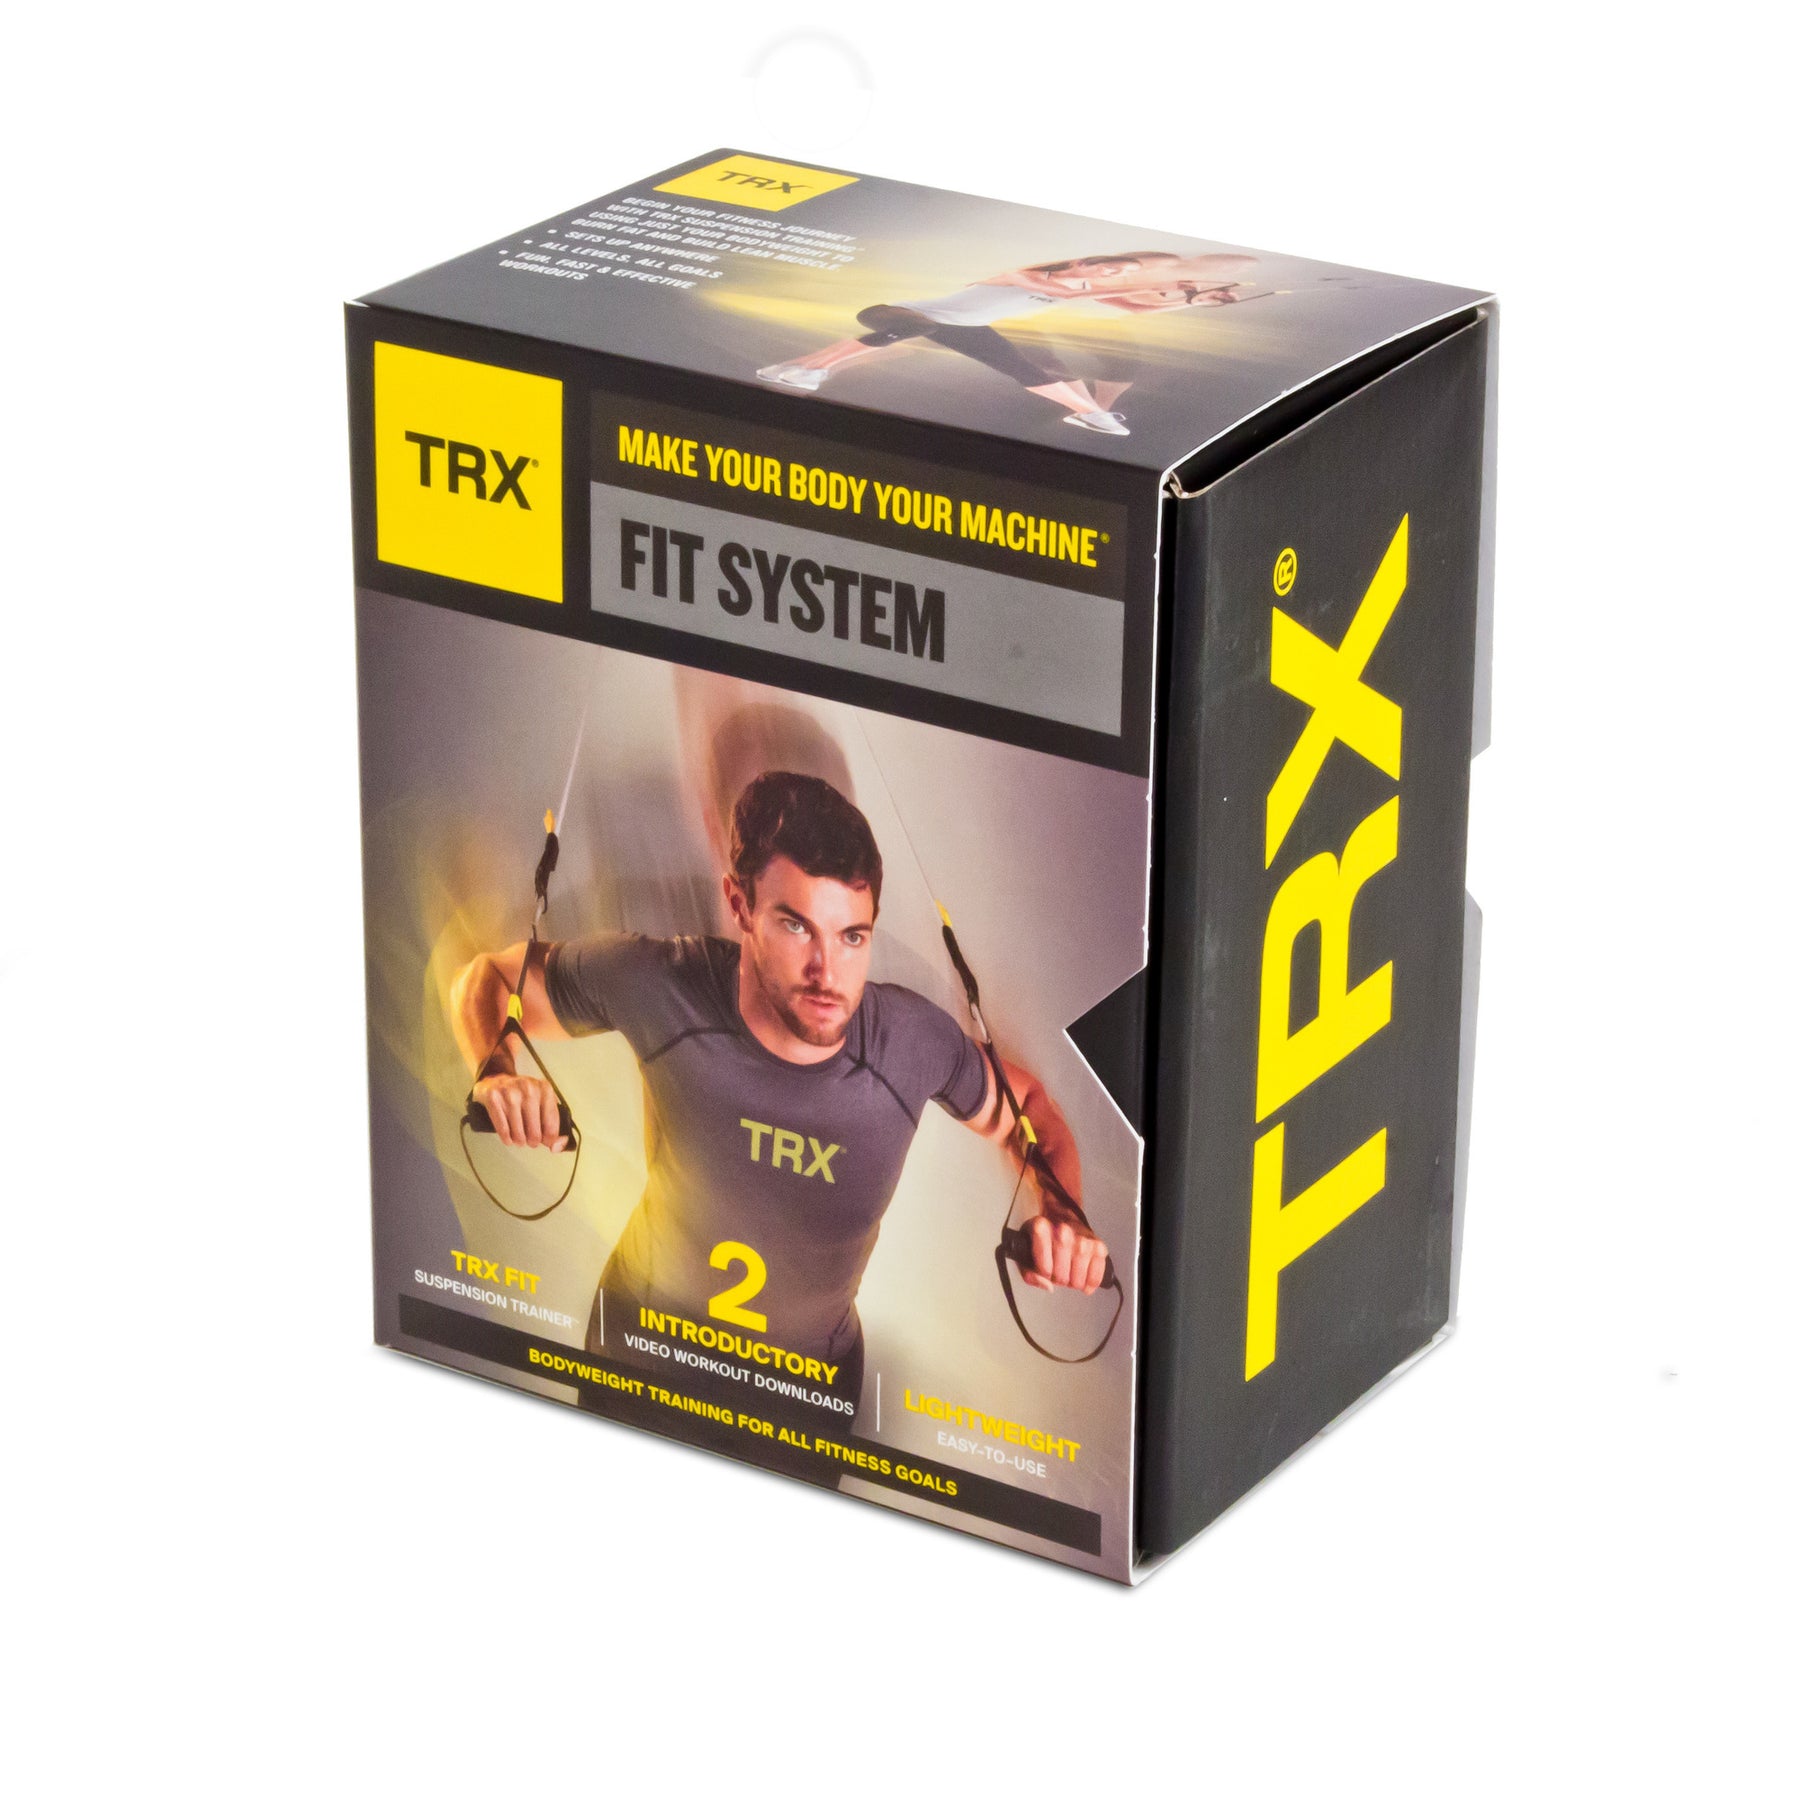 TRX® FIT SYSTEM